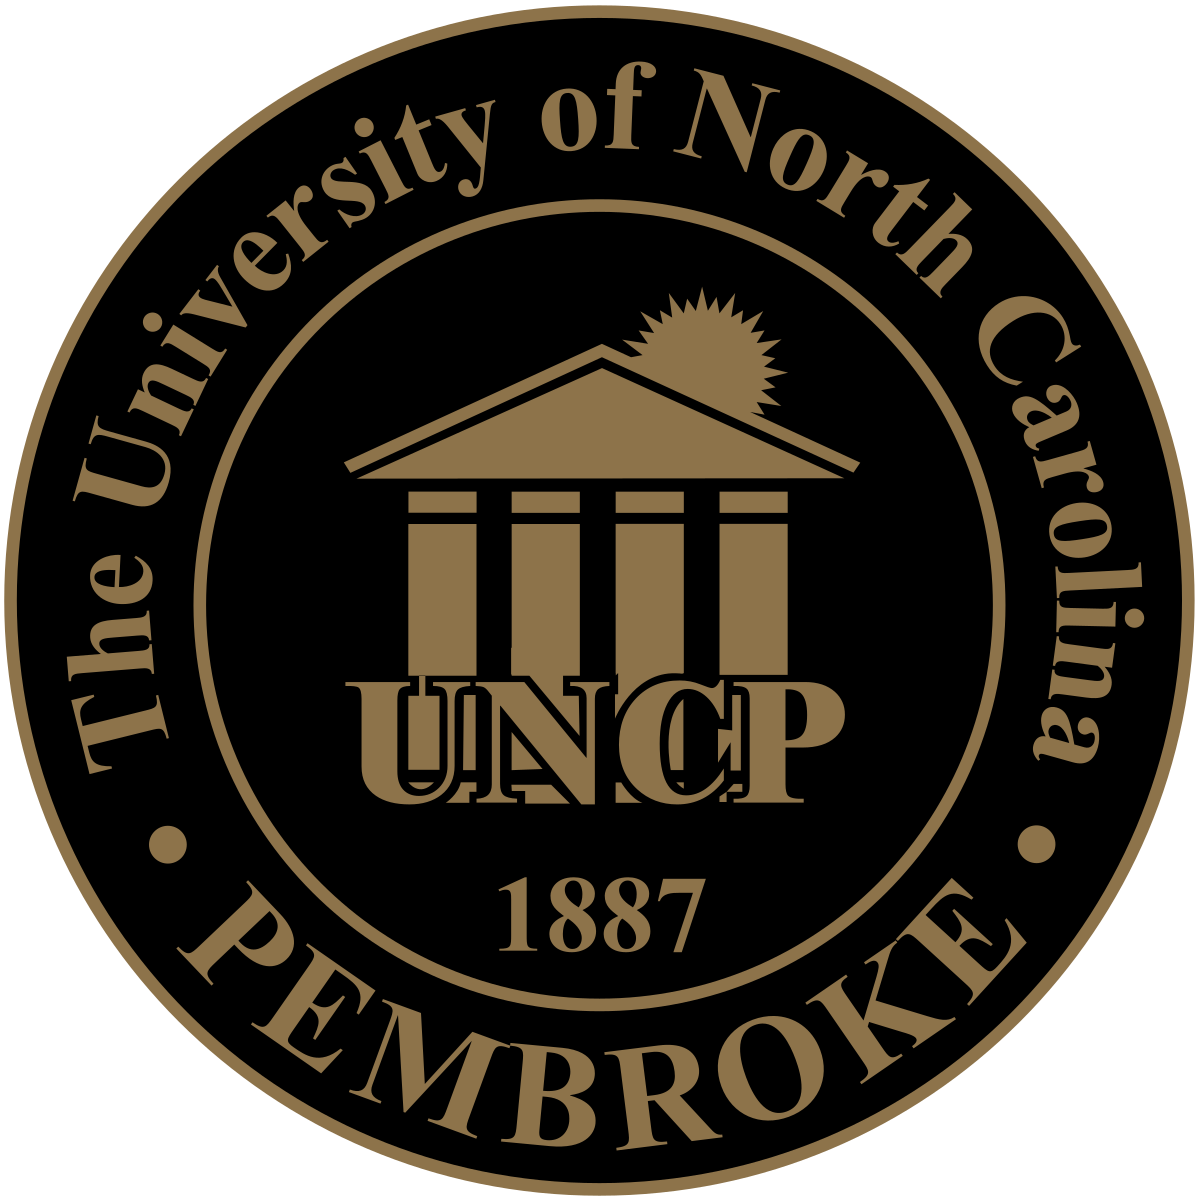 University of North Carolina at Pembroke - Wikipedia